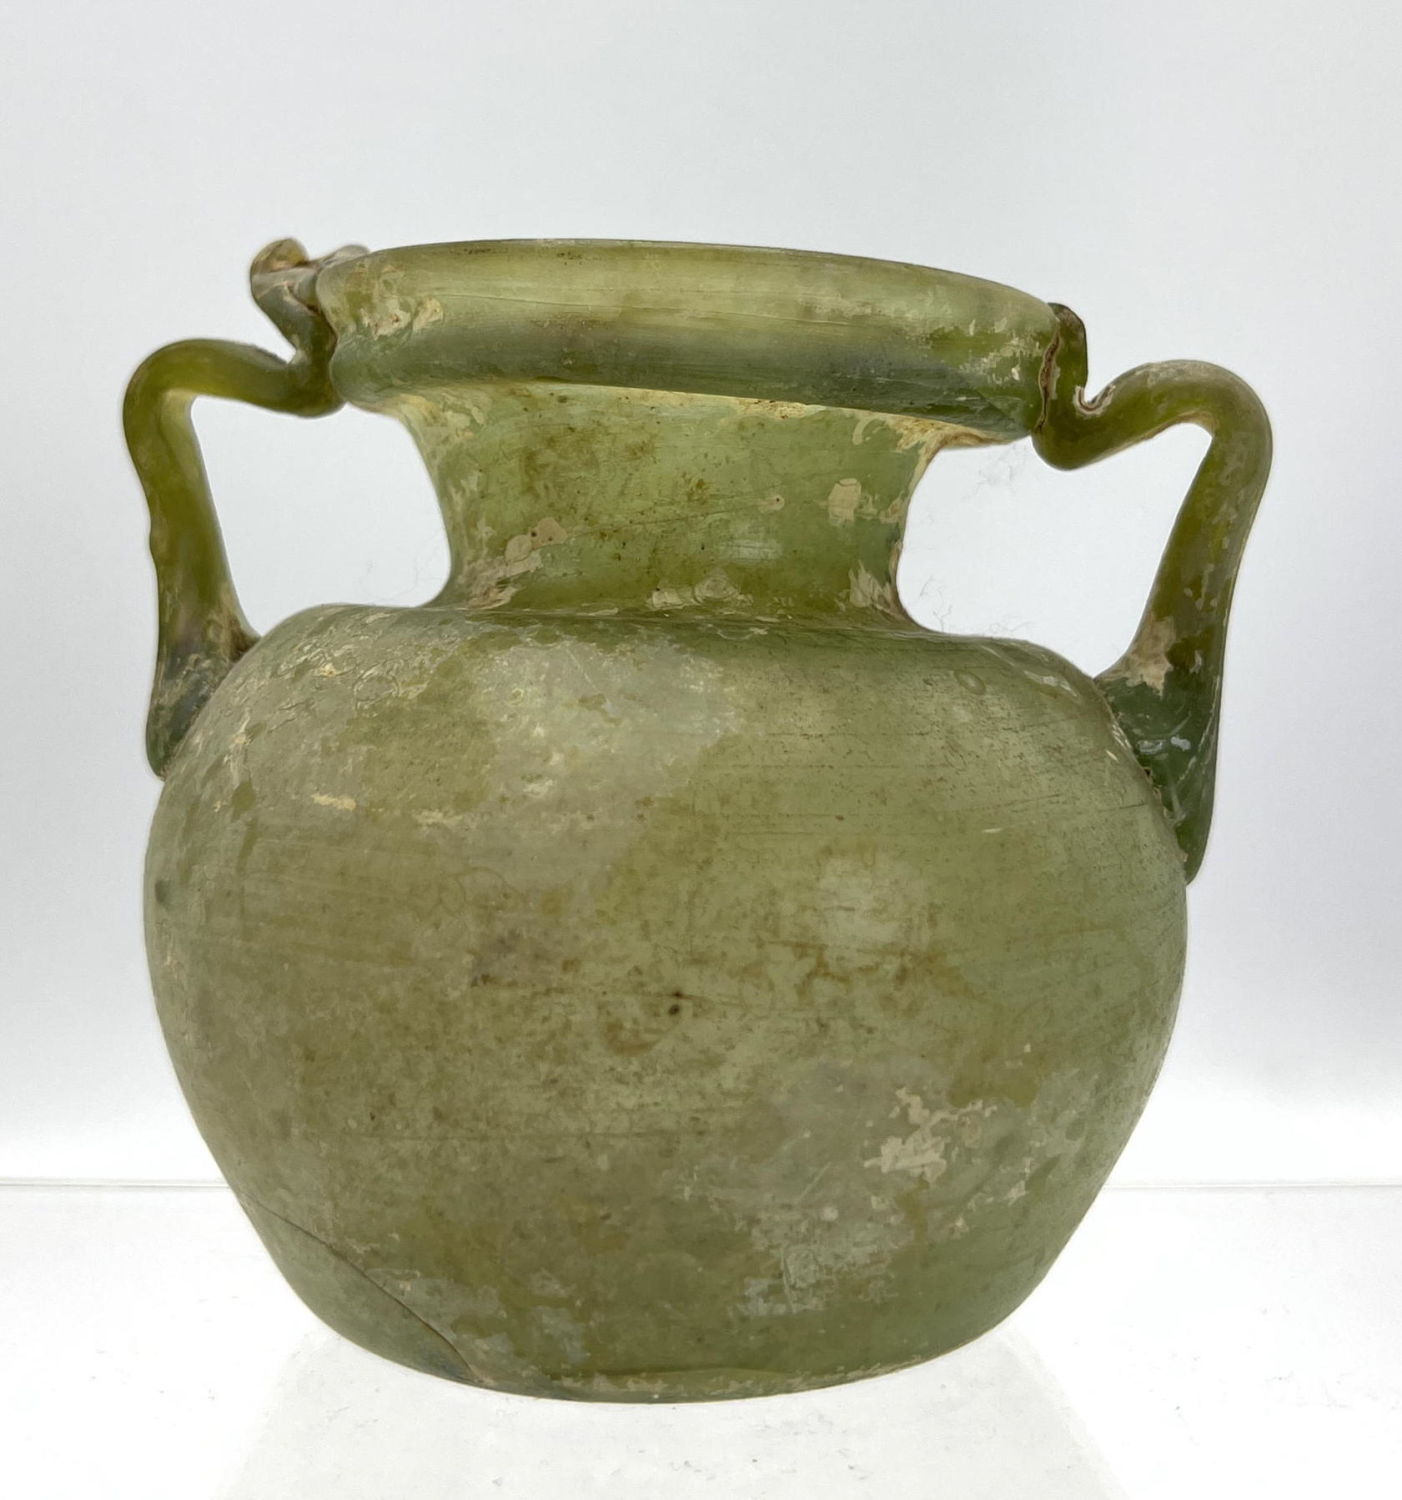 2 handled vase, light green Ancient